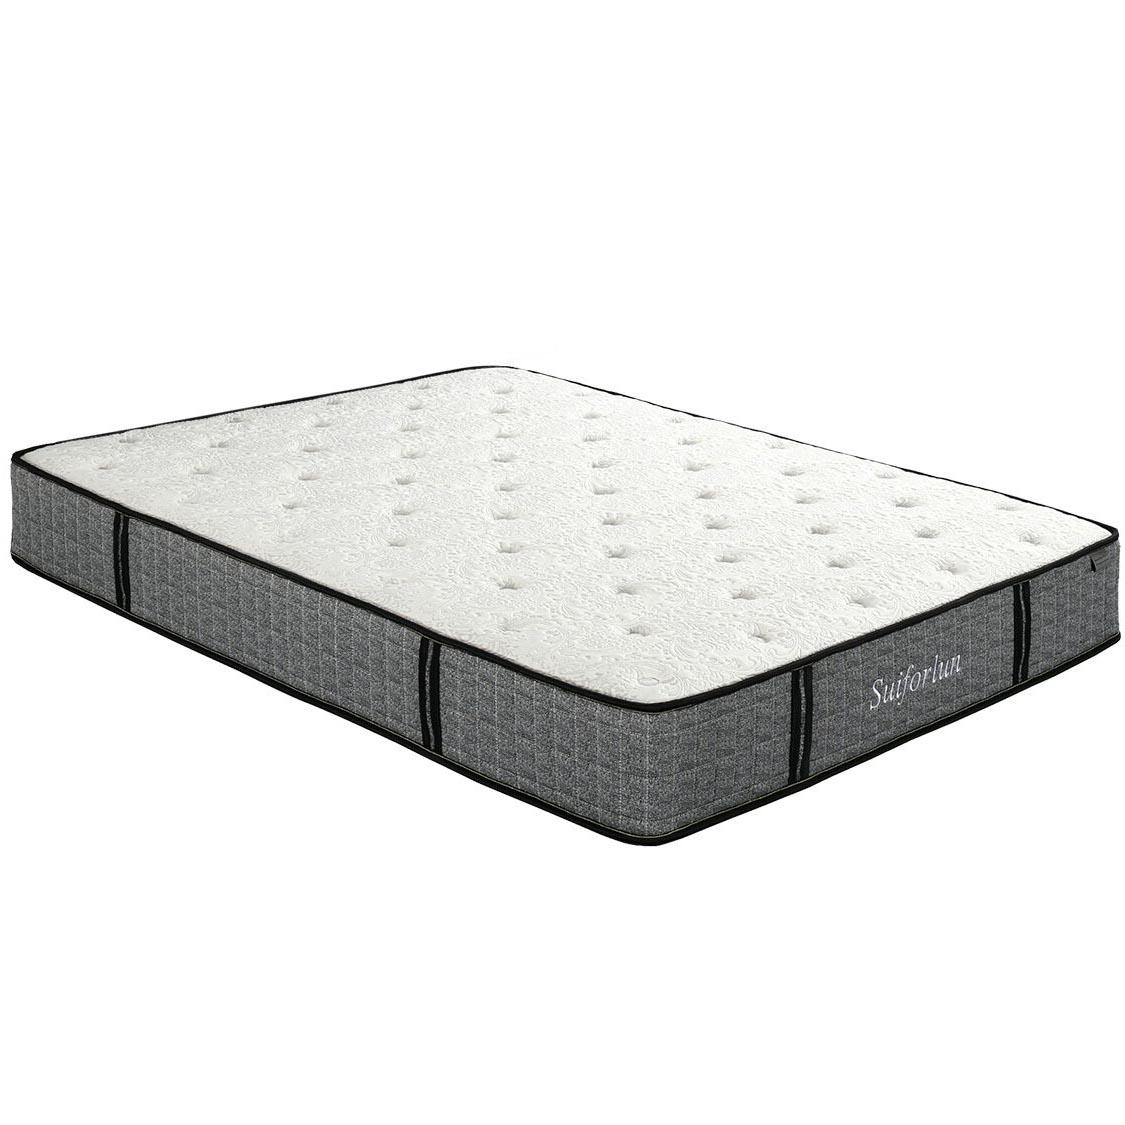 Suiforlun mattress 12 inch hybrid bed customized for sleeping-2